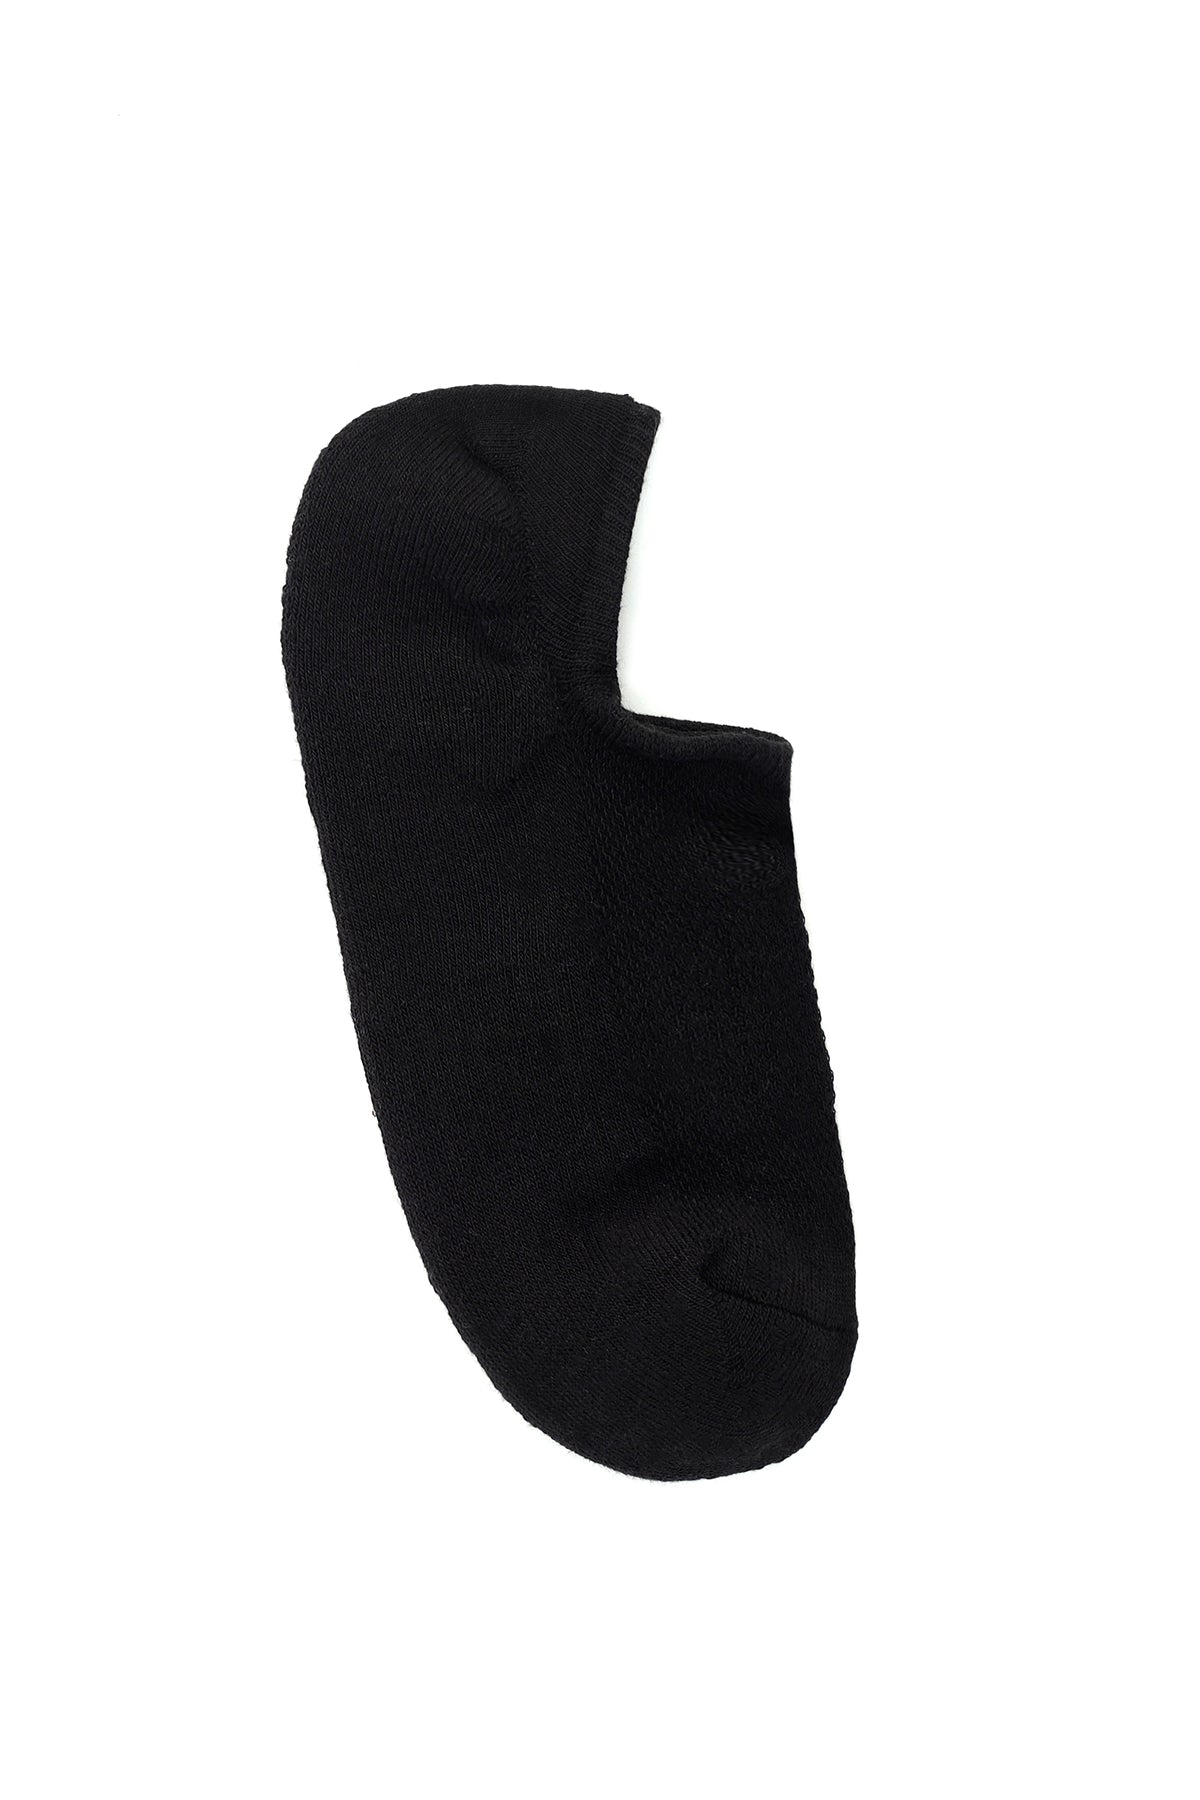 Kadın Siyah Pamuk Çorap